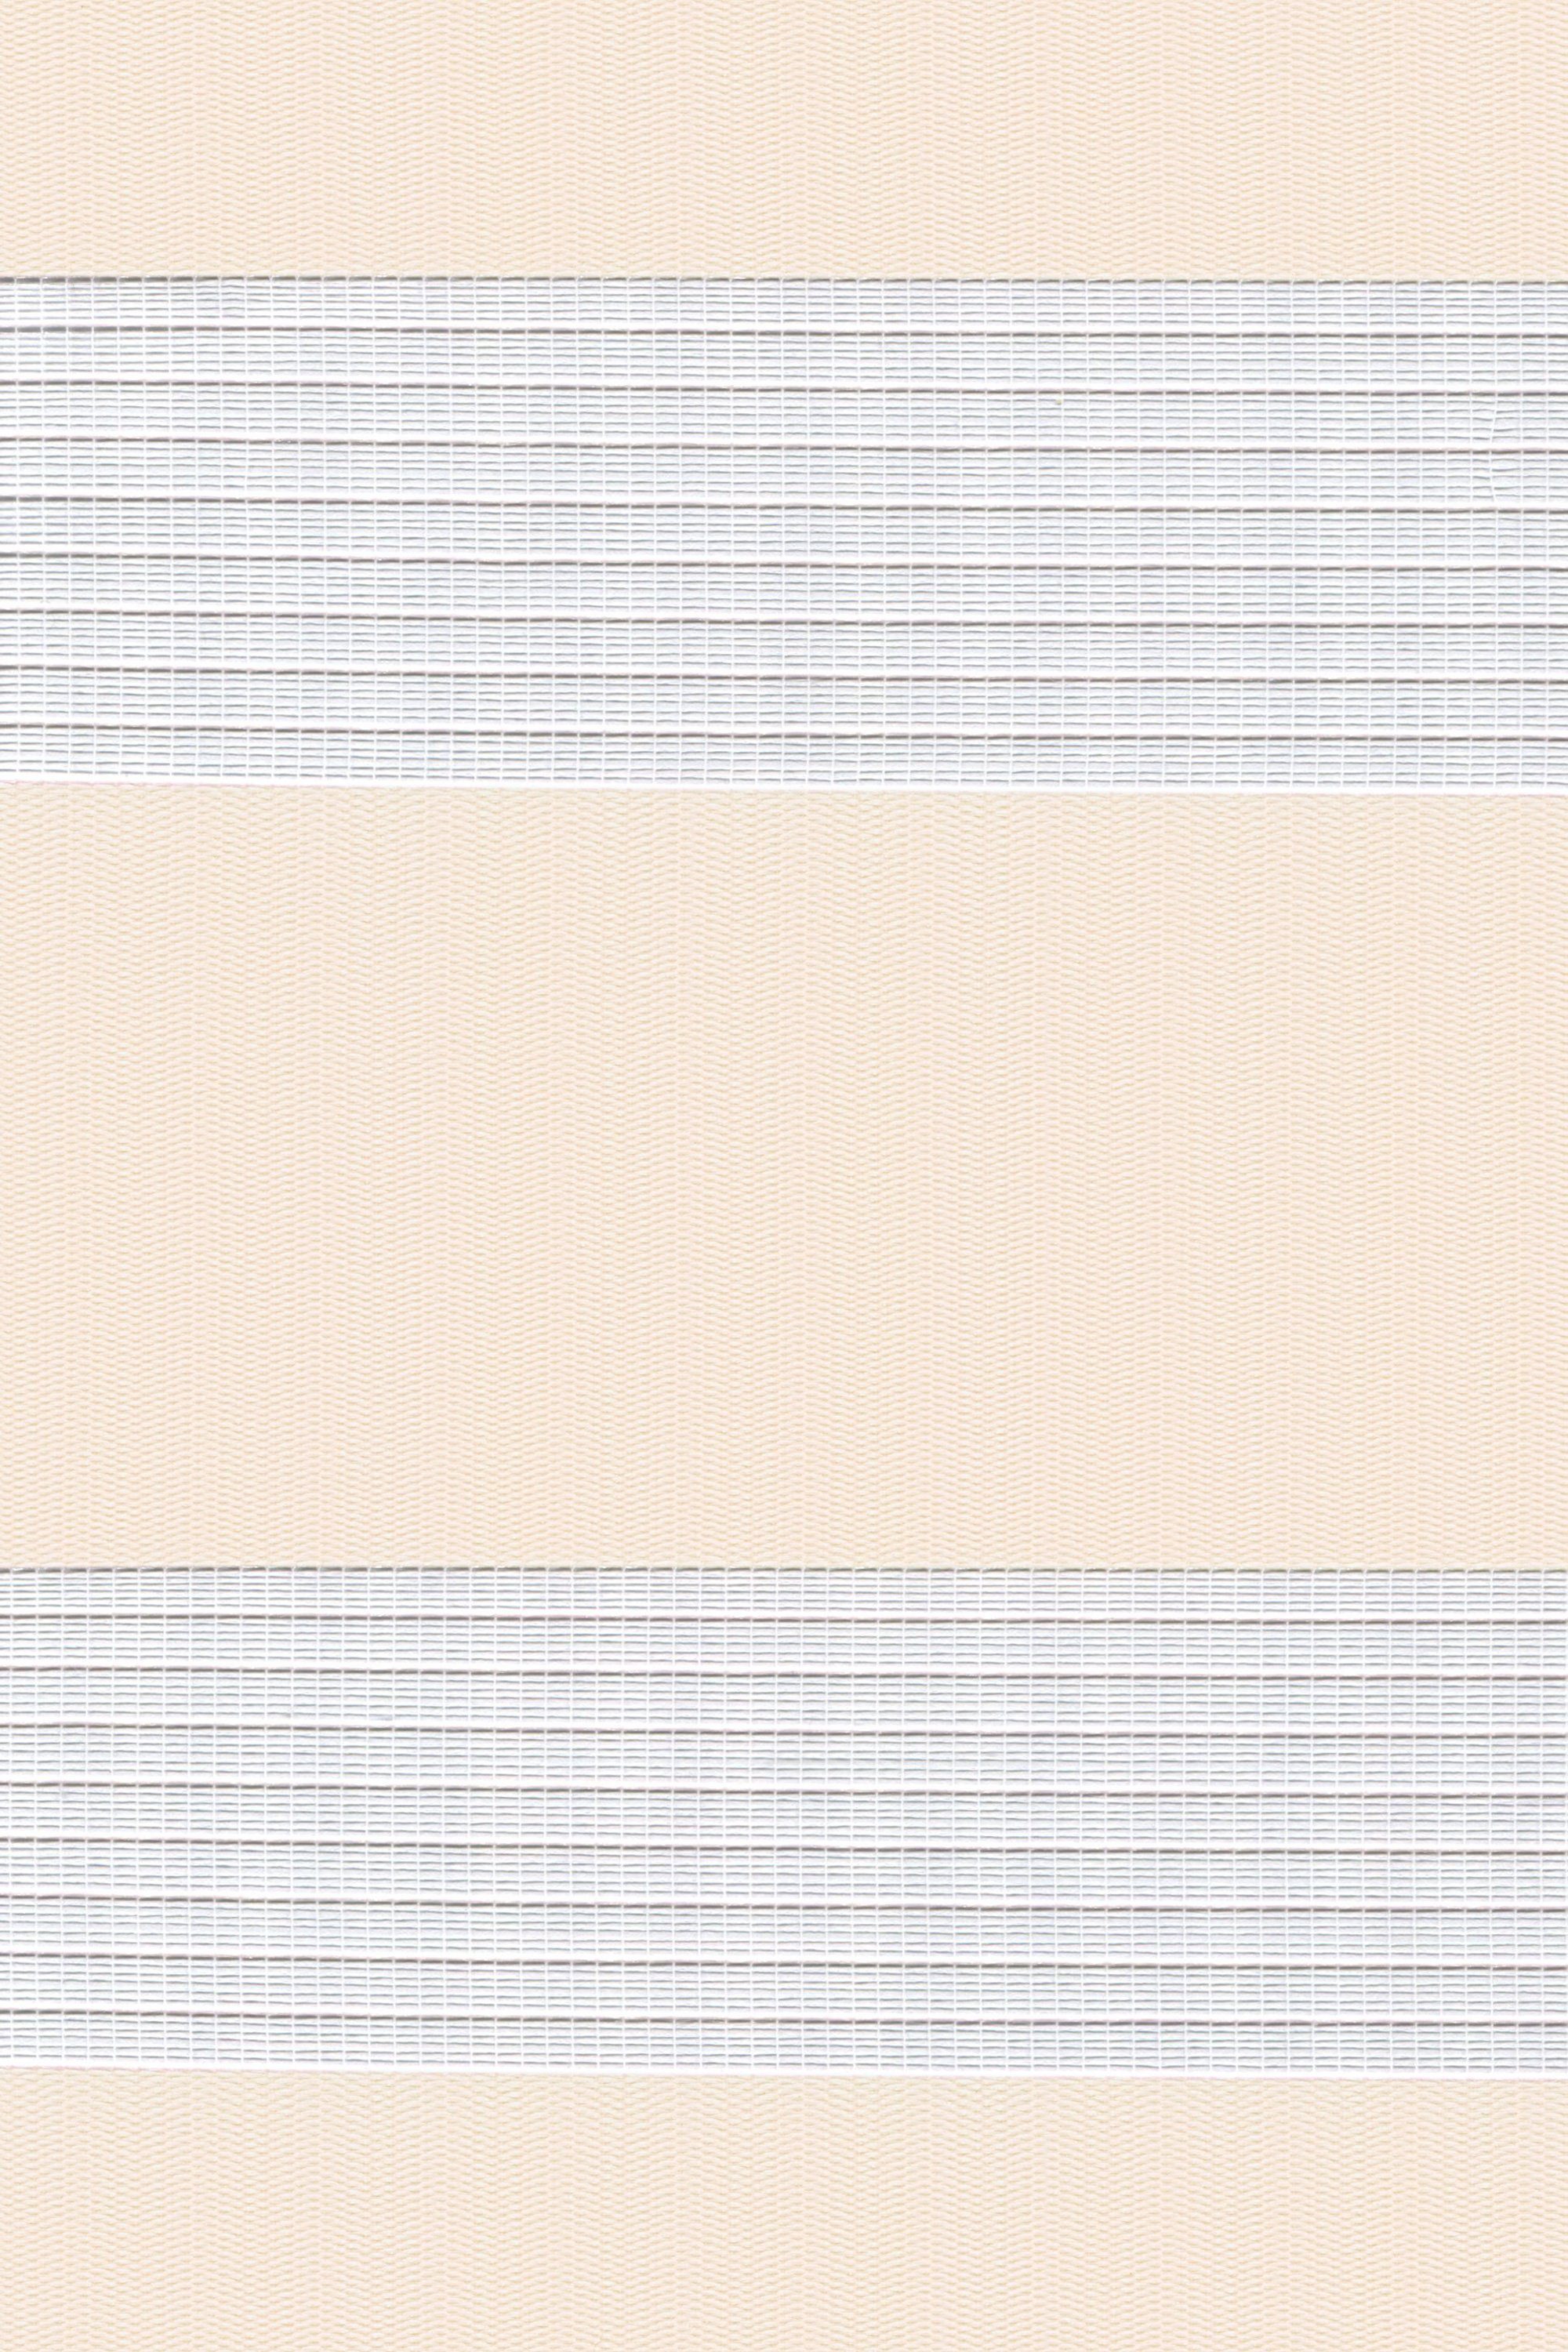 180x60cm blickdicht, Rollo Miniblende beige HxB Hellbeige, LYSEL®, hellbeige Solid